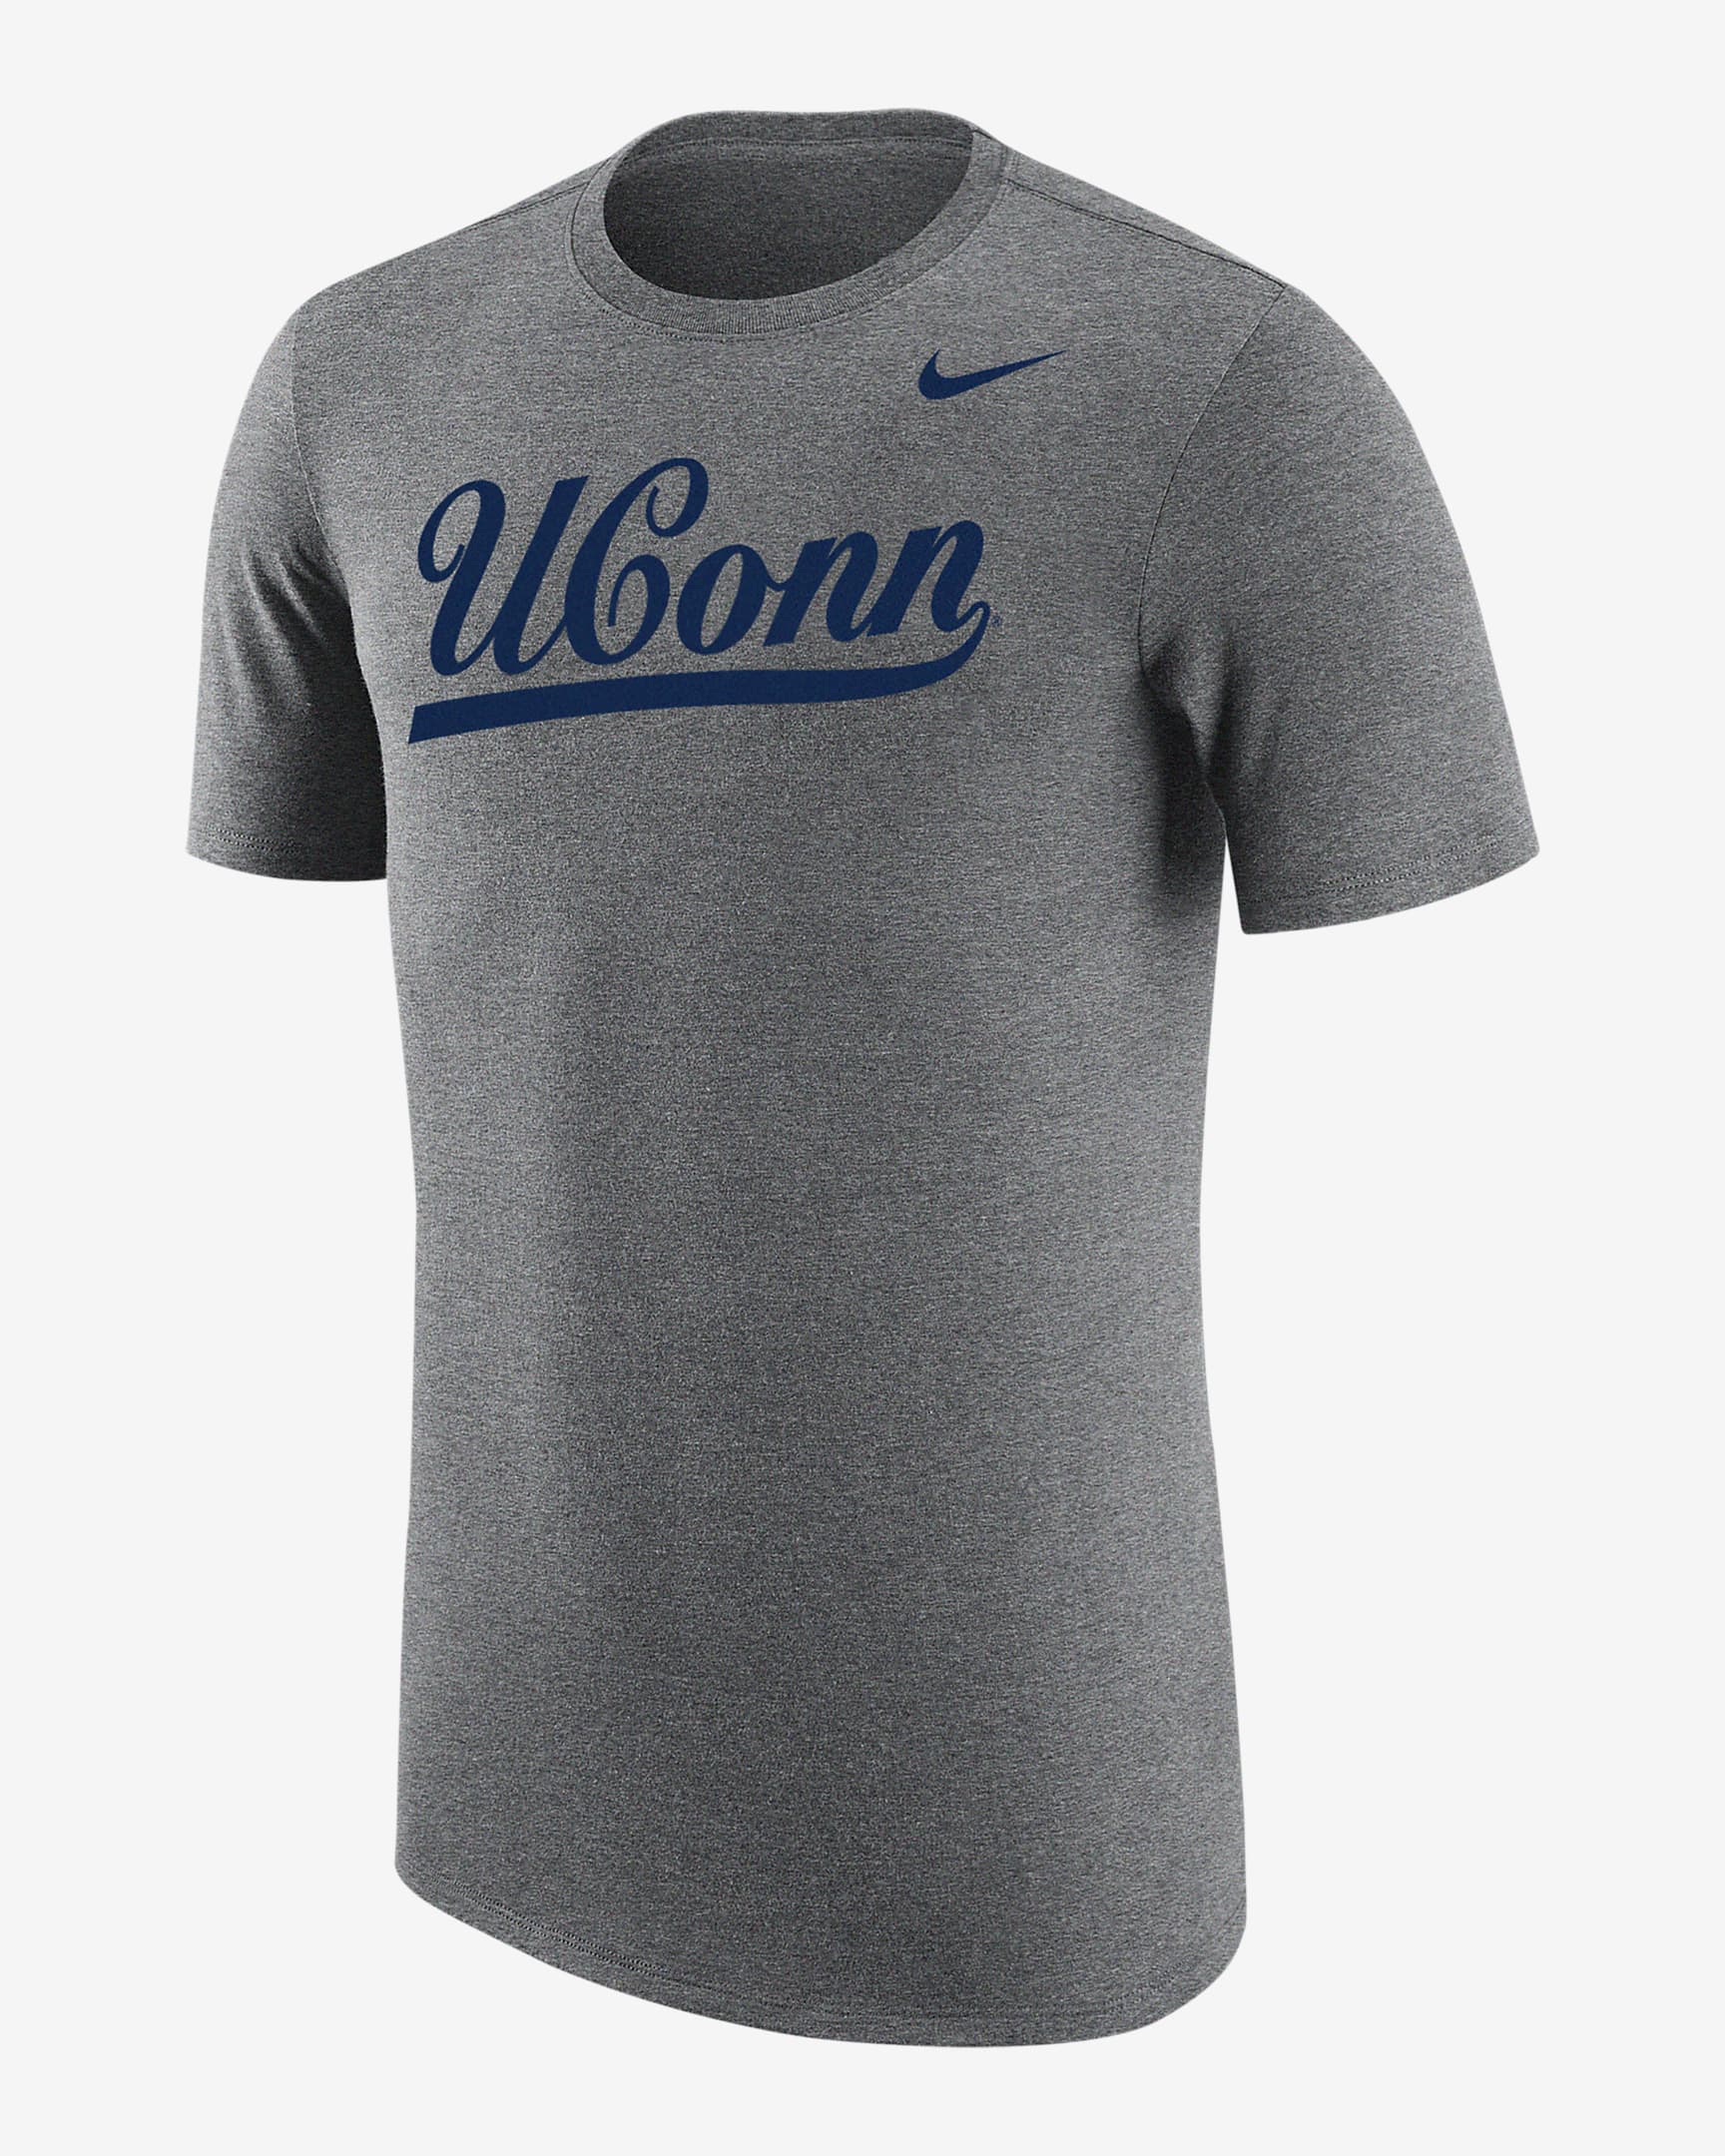 UConn Men's Nike College T-Shirt. Nike.com